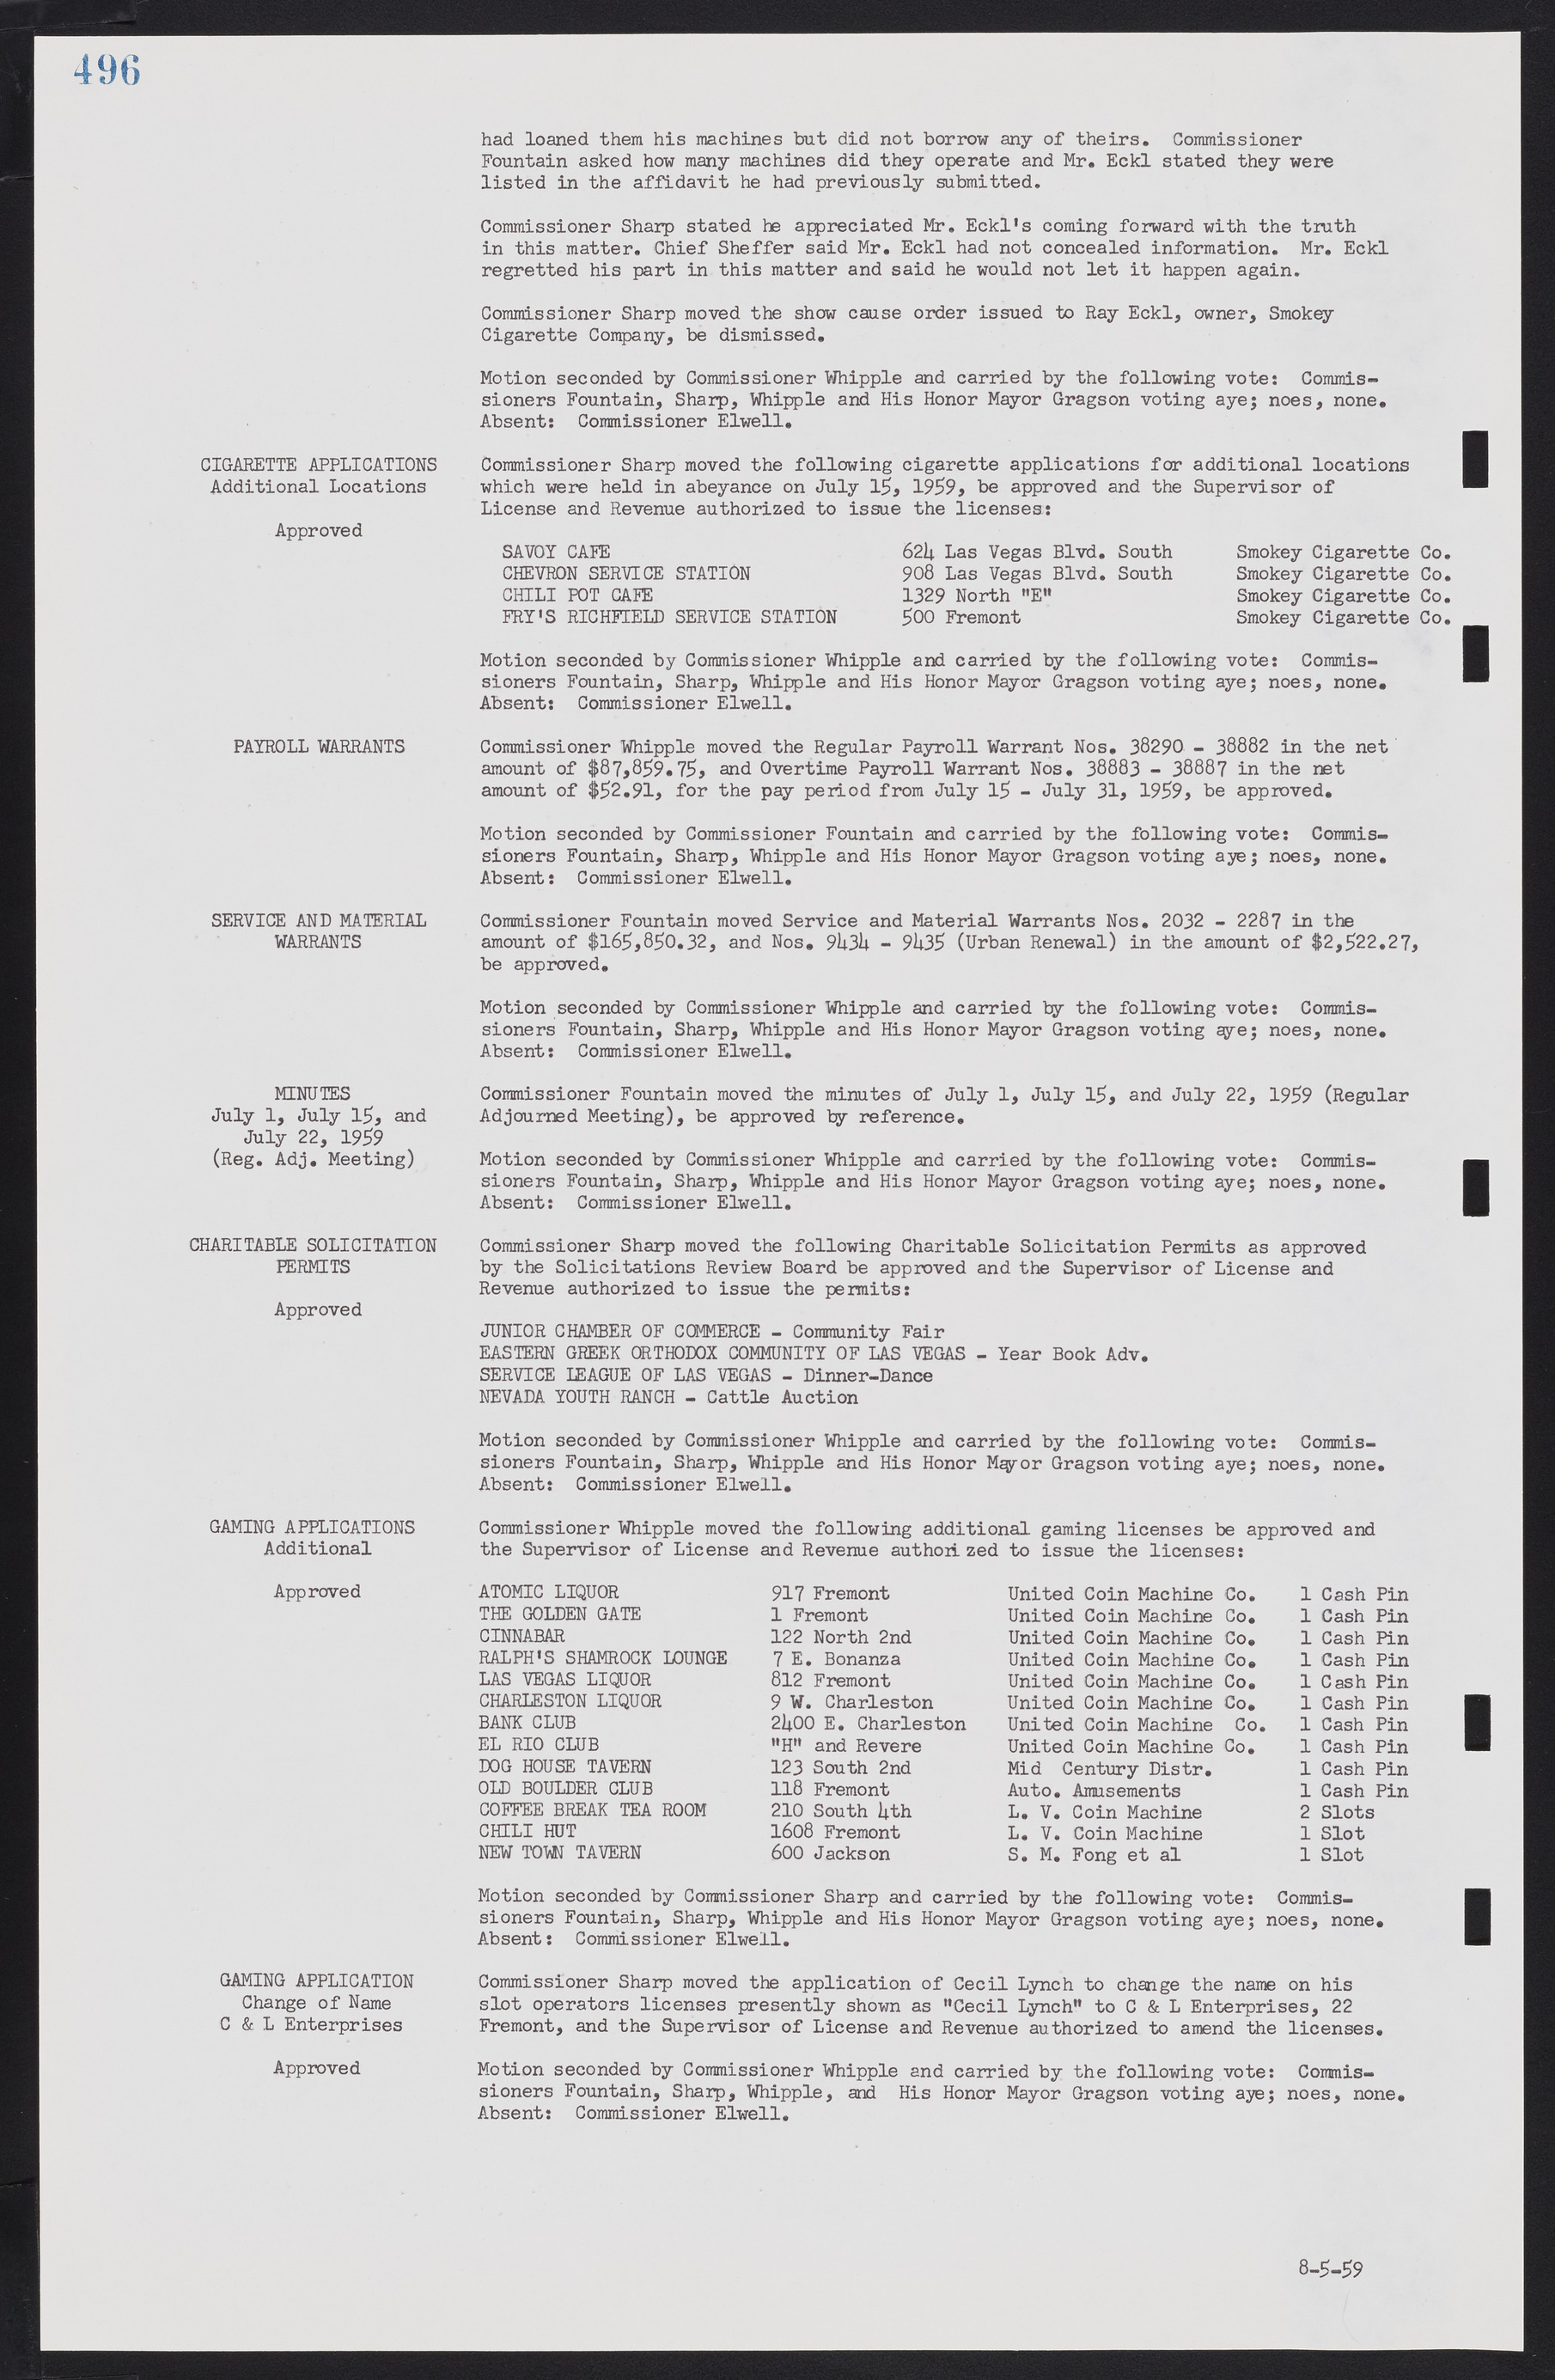 Las Vegas City Commission Minutes, November 20, 1957 to December 2, 1959, lvc000011-532